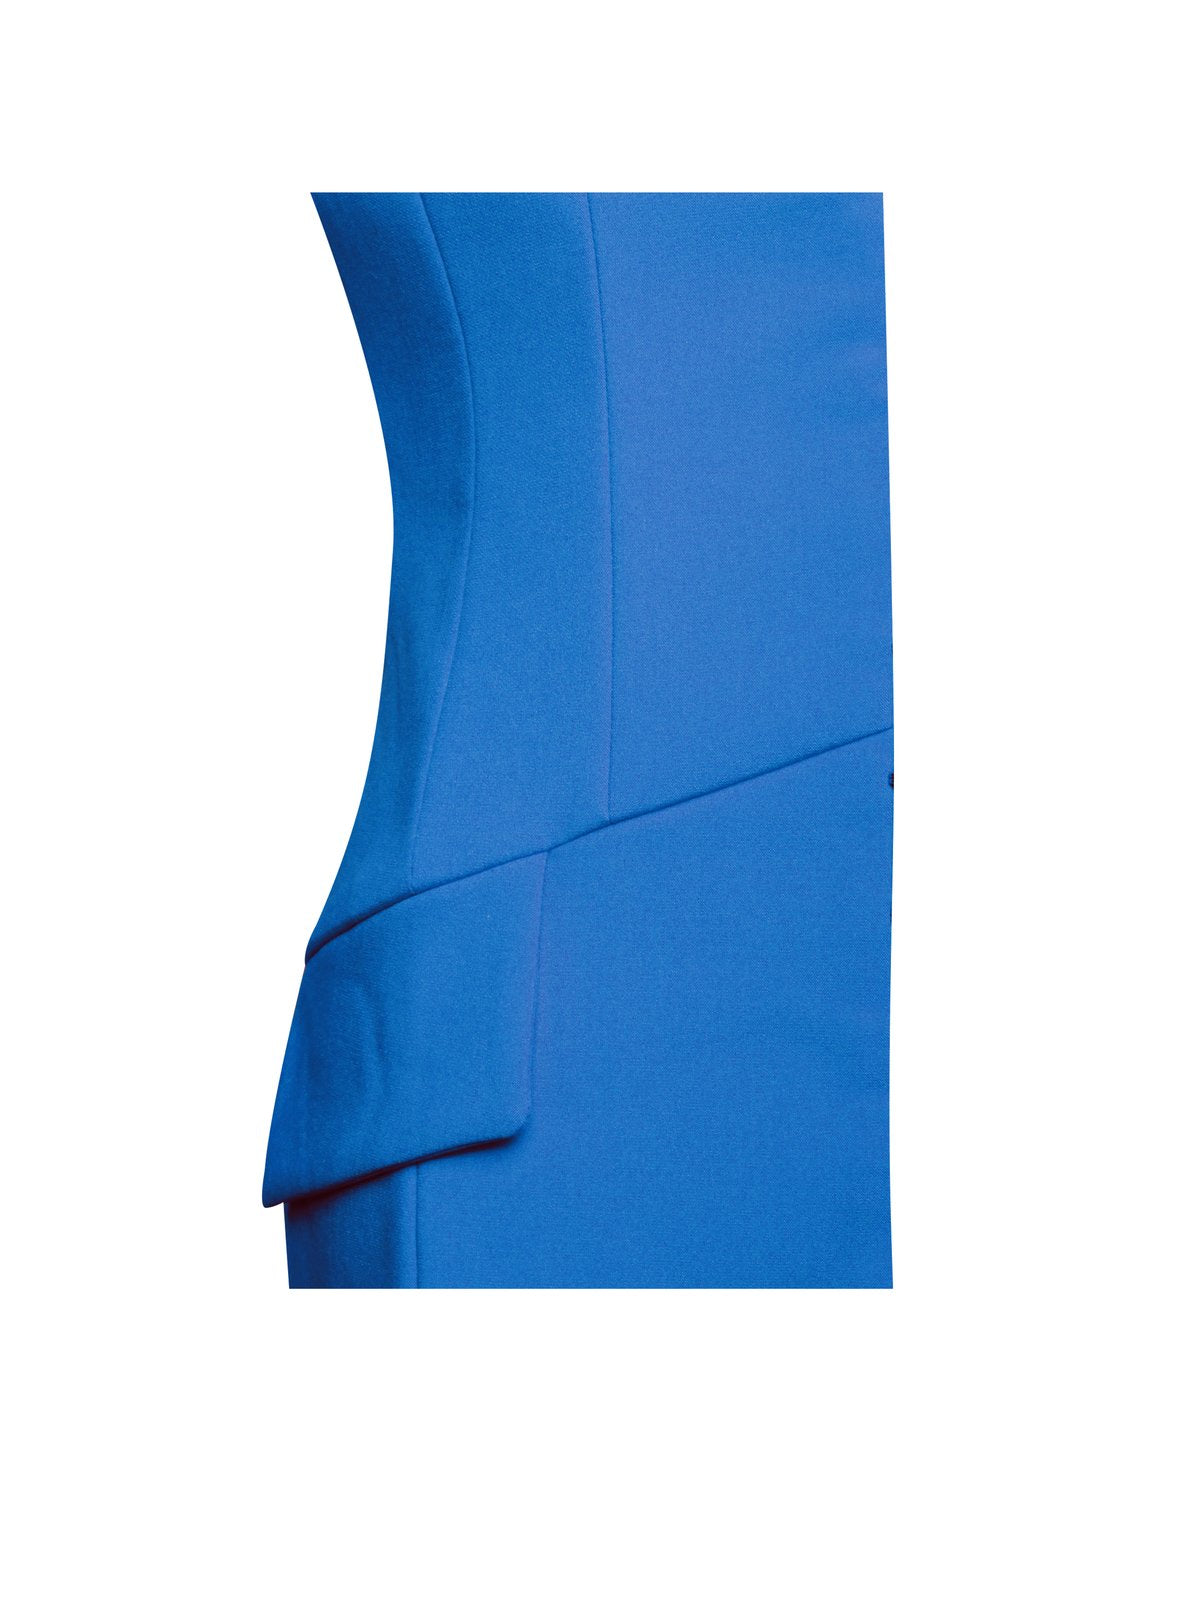 Buy Alpha Suit Dress Sodalite Blue Online